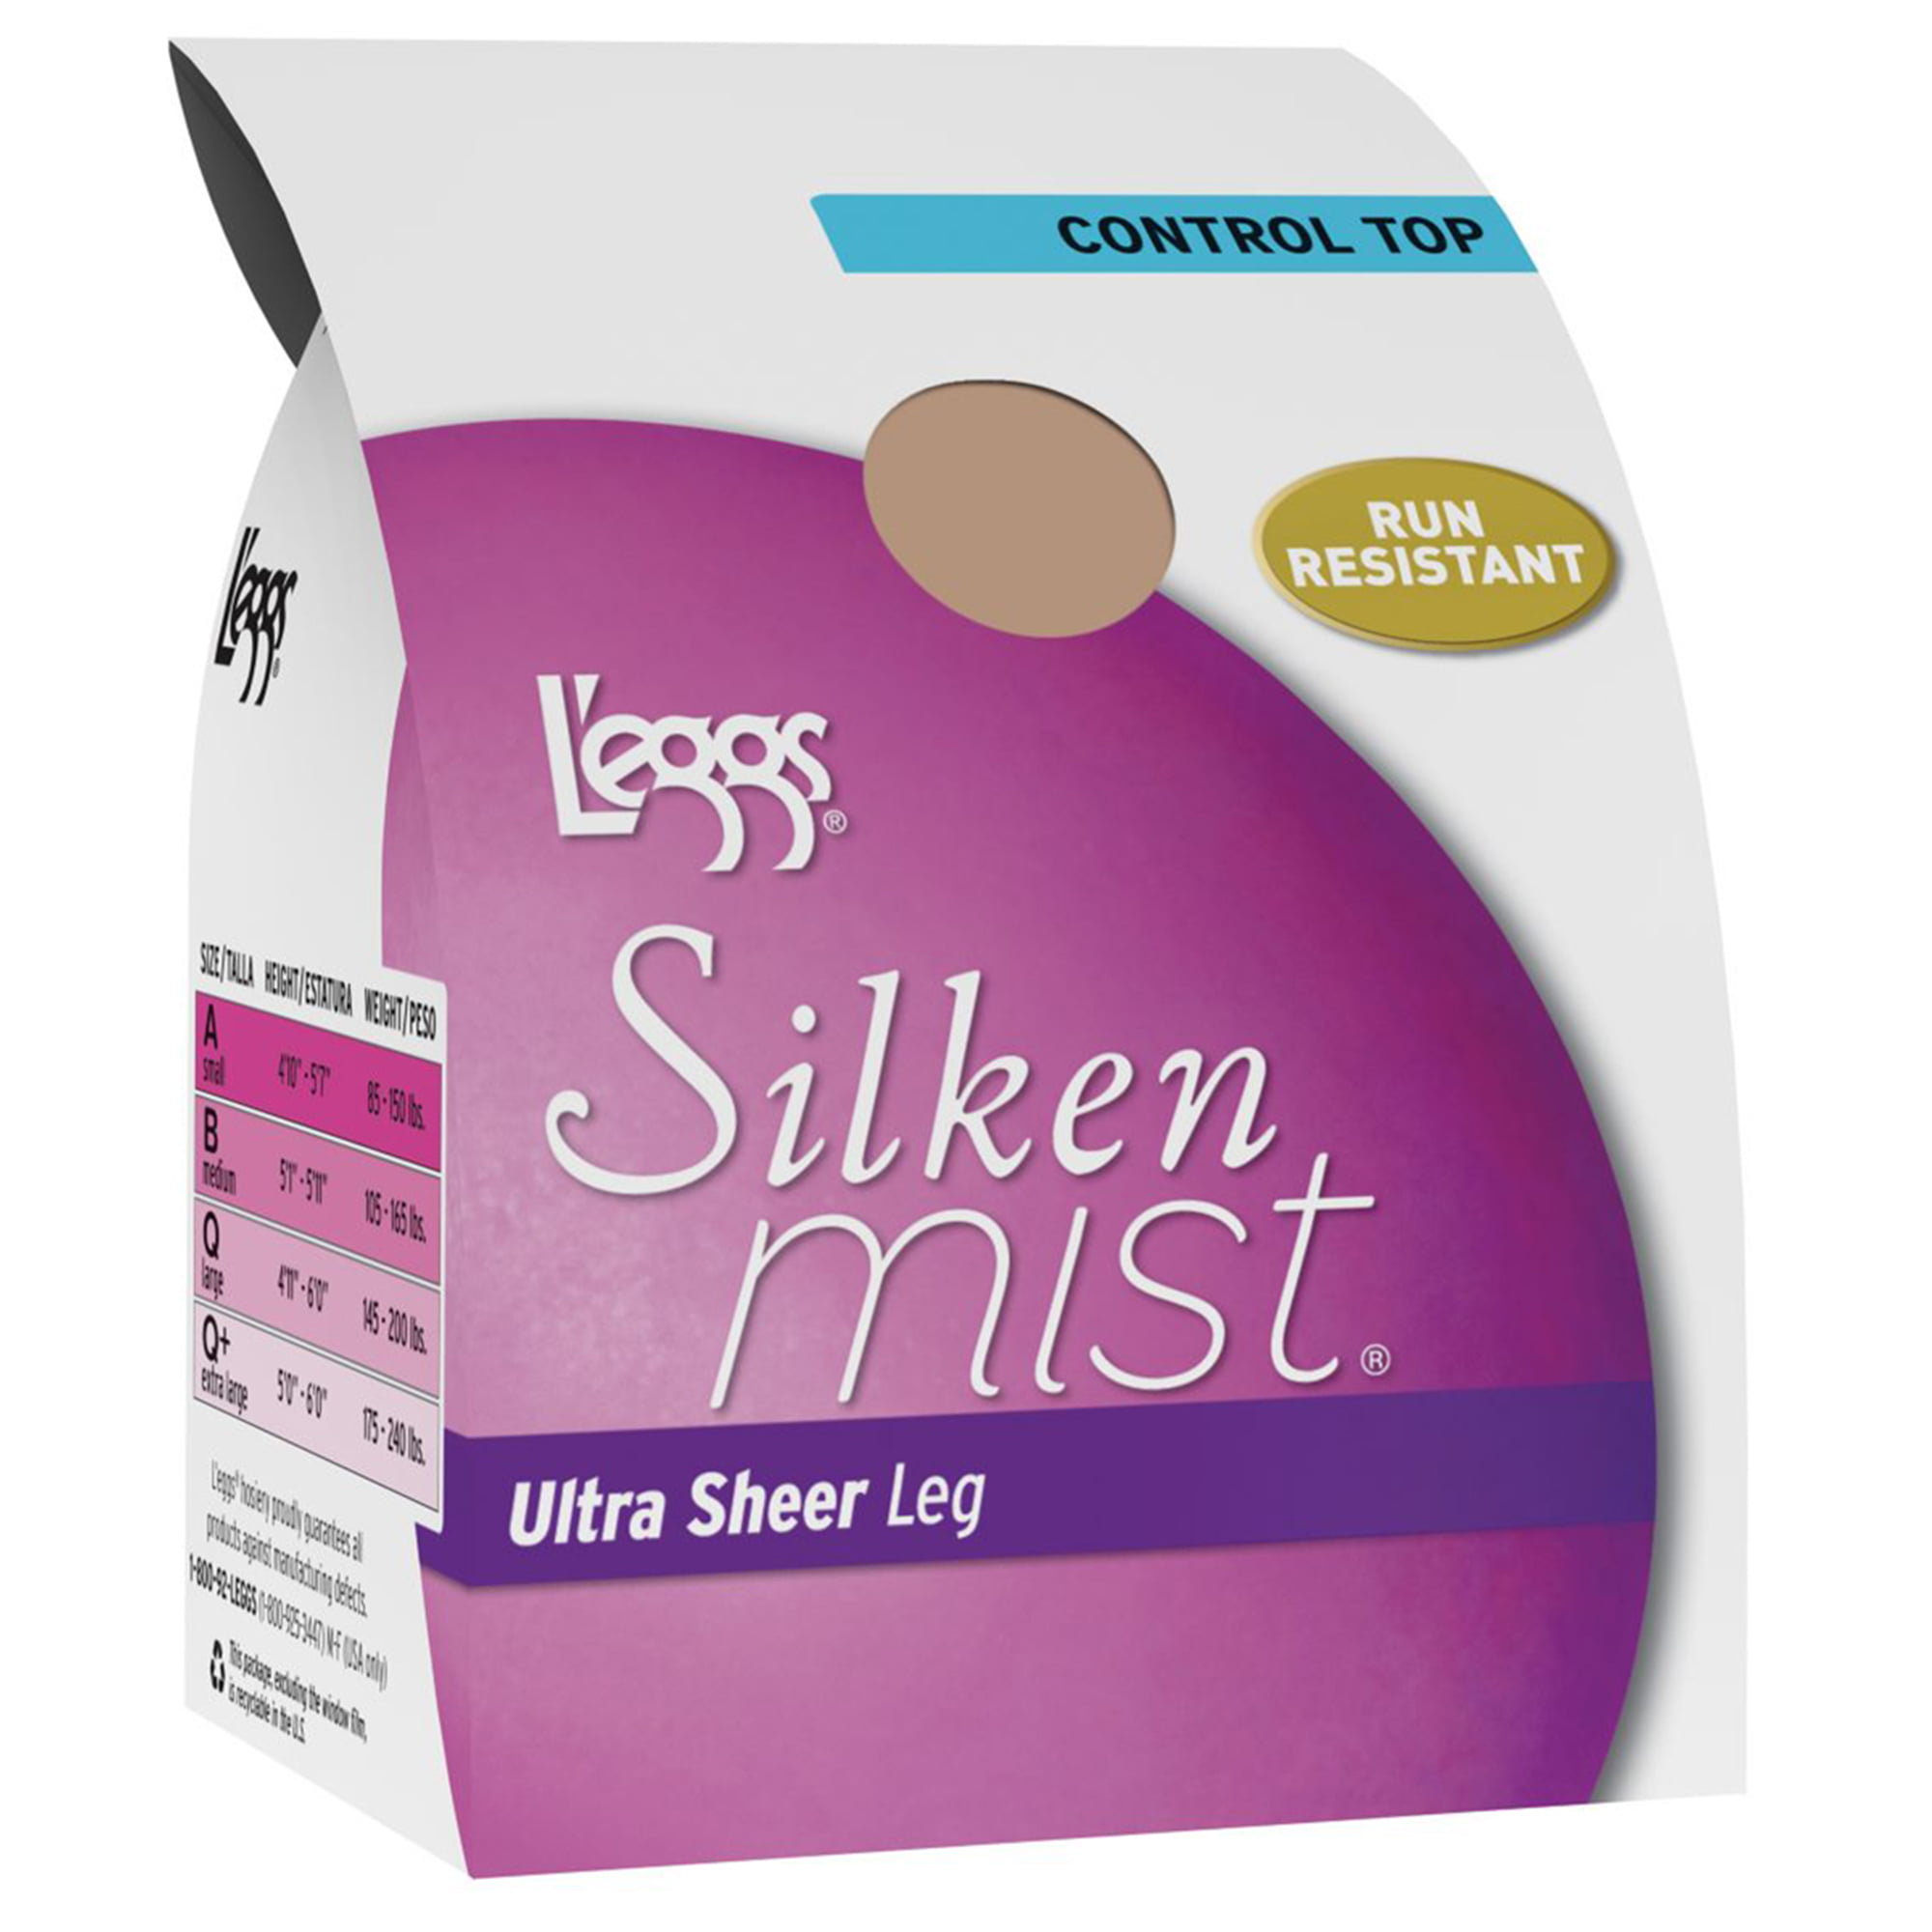 L'eggs Silken Mist Ultra Sheer Control Top Sheer Toe Pantyhose, Style ...